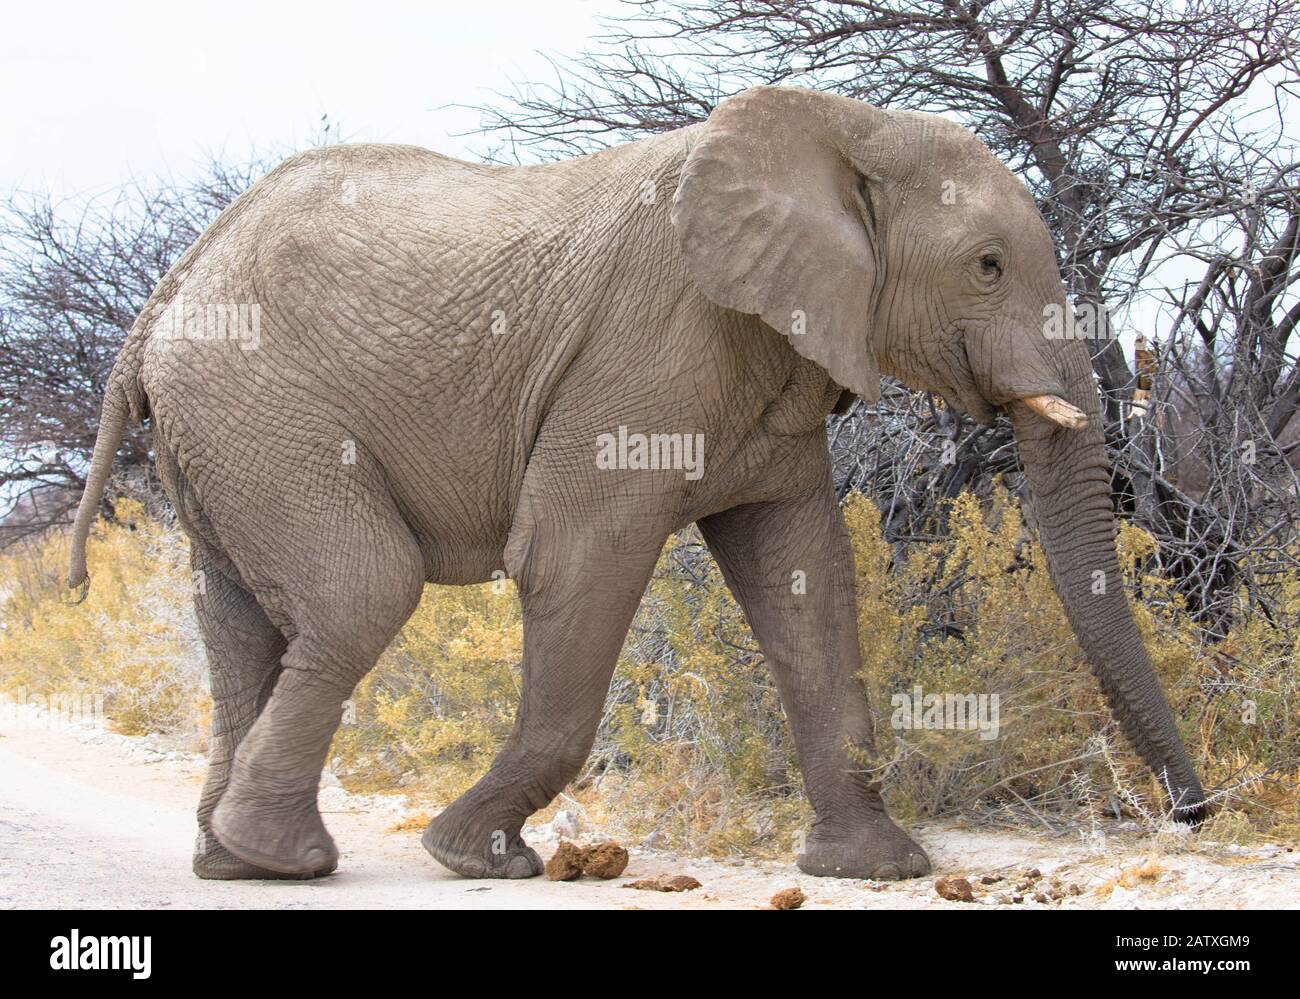 Elephant drinking water Stock Photo